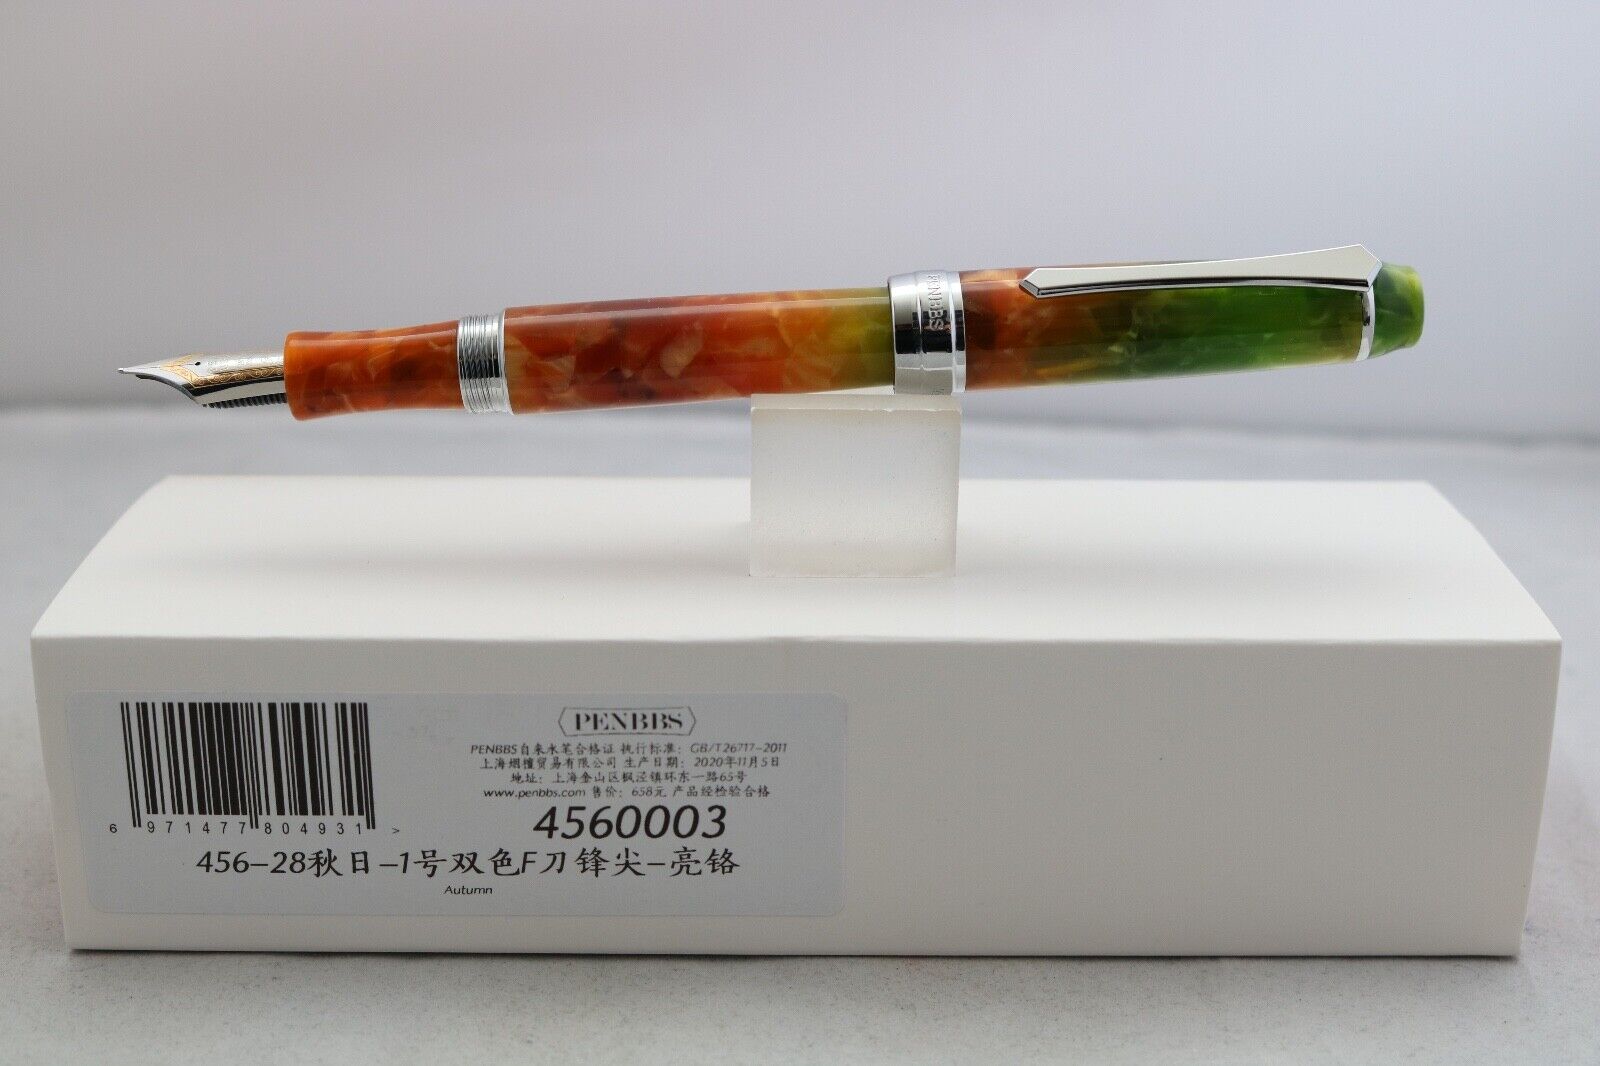 PenBBS No. 456 Vacumatic Fine Fountain Pens, 25 Finishes, UK Seller